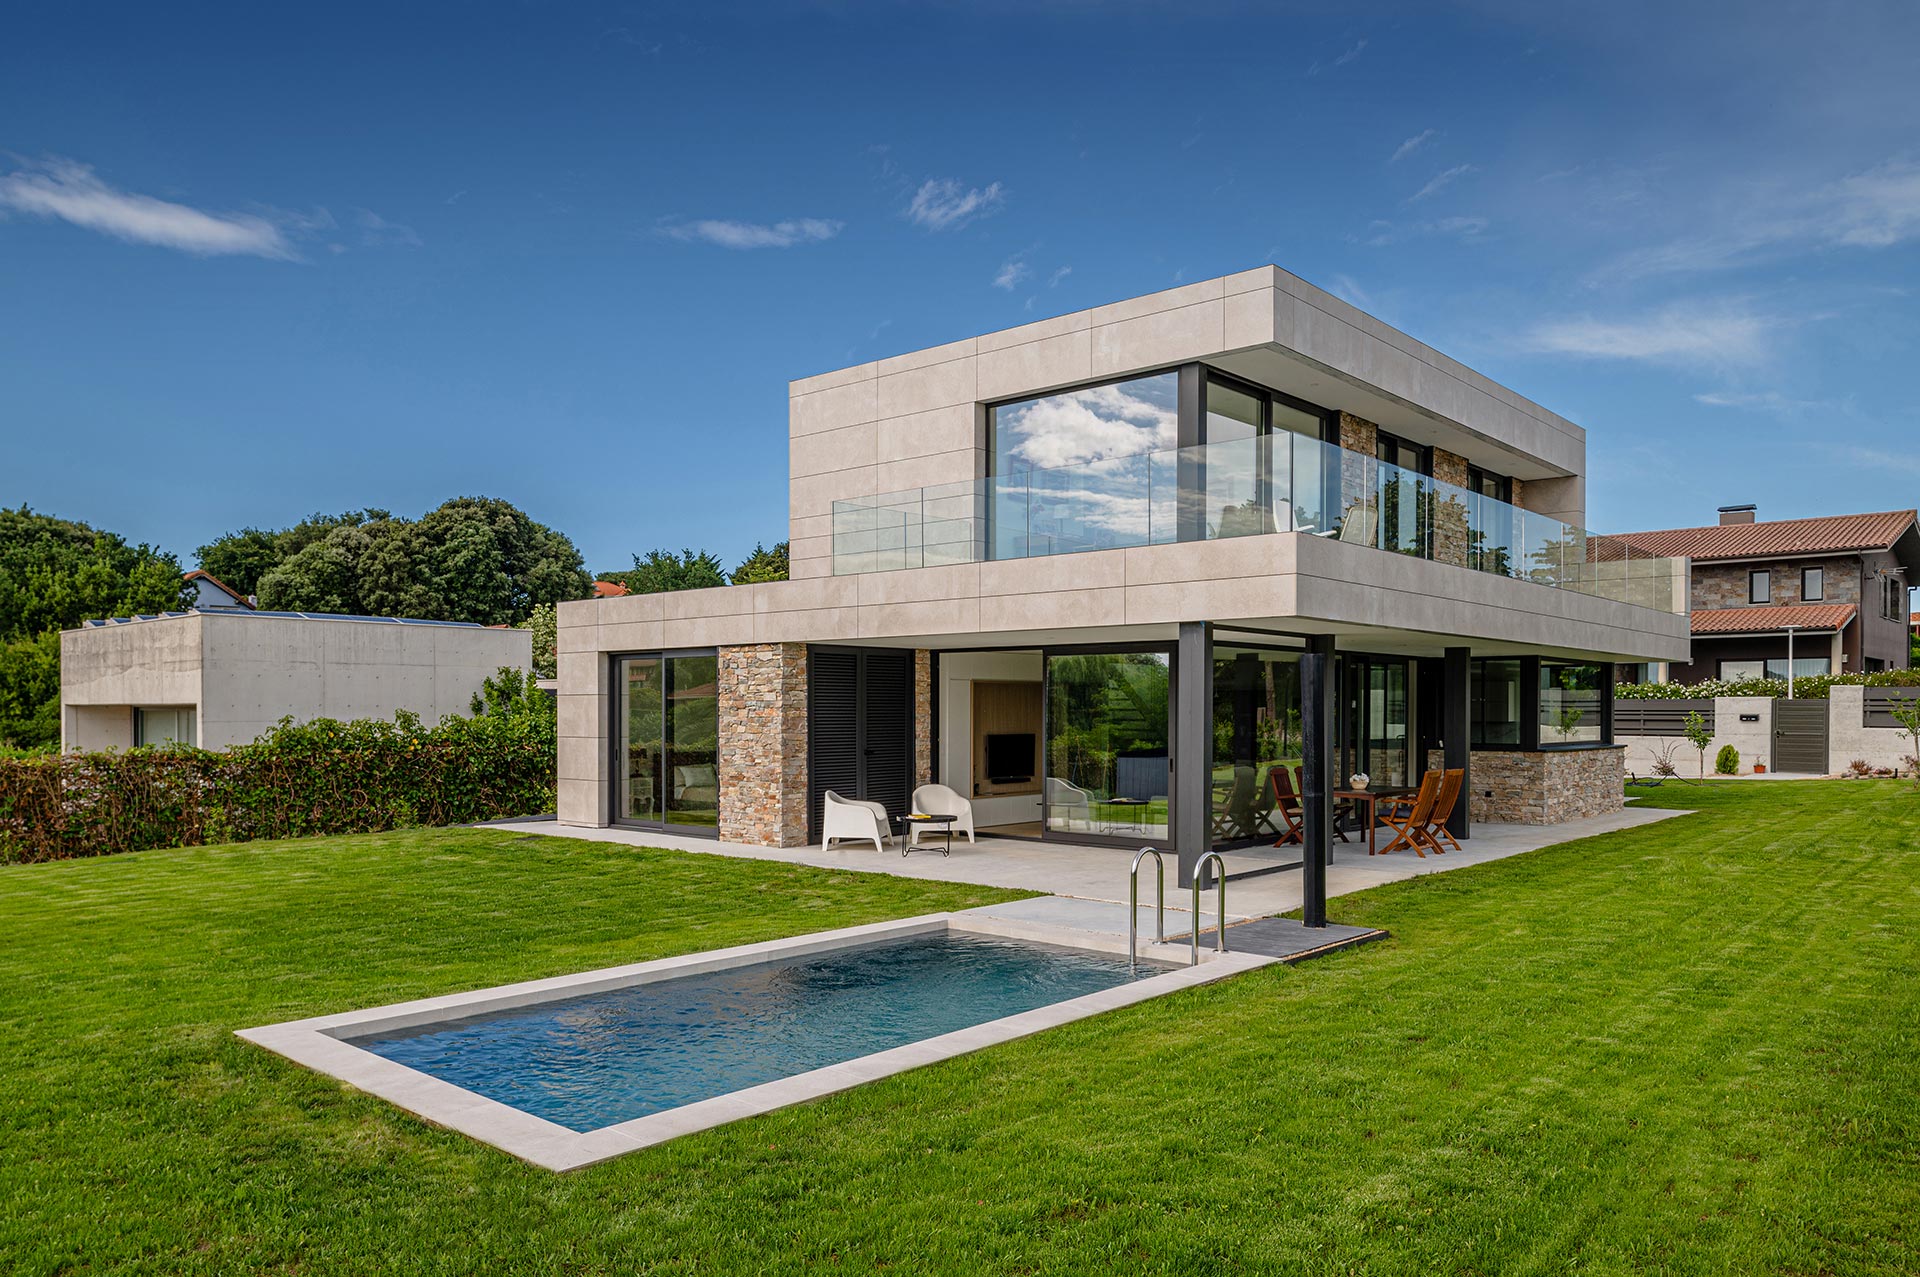 Casa moderna con piscina, porche y grandes cristaleras diseñada por Moah Arquitectos en Somo. Cantabria